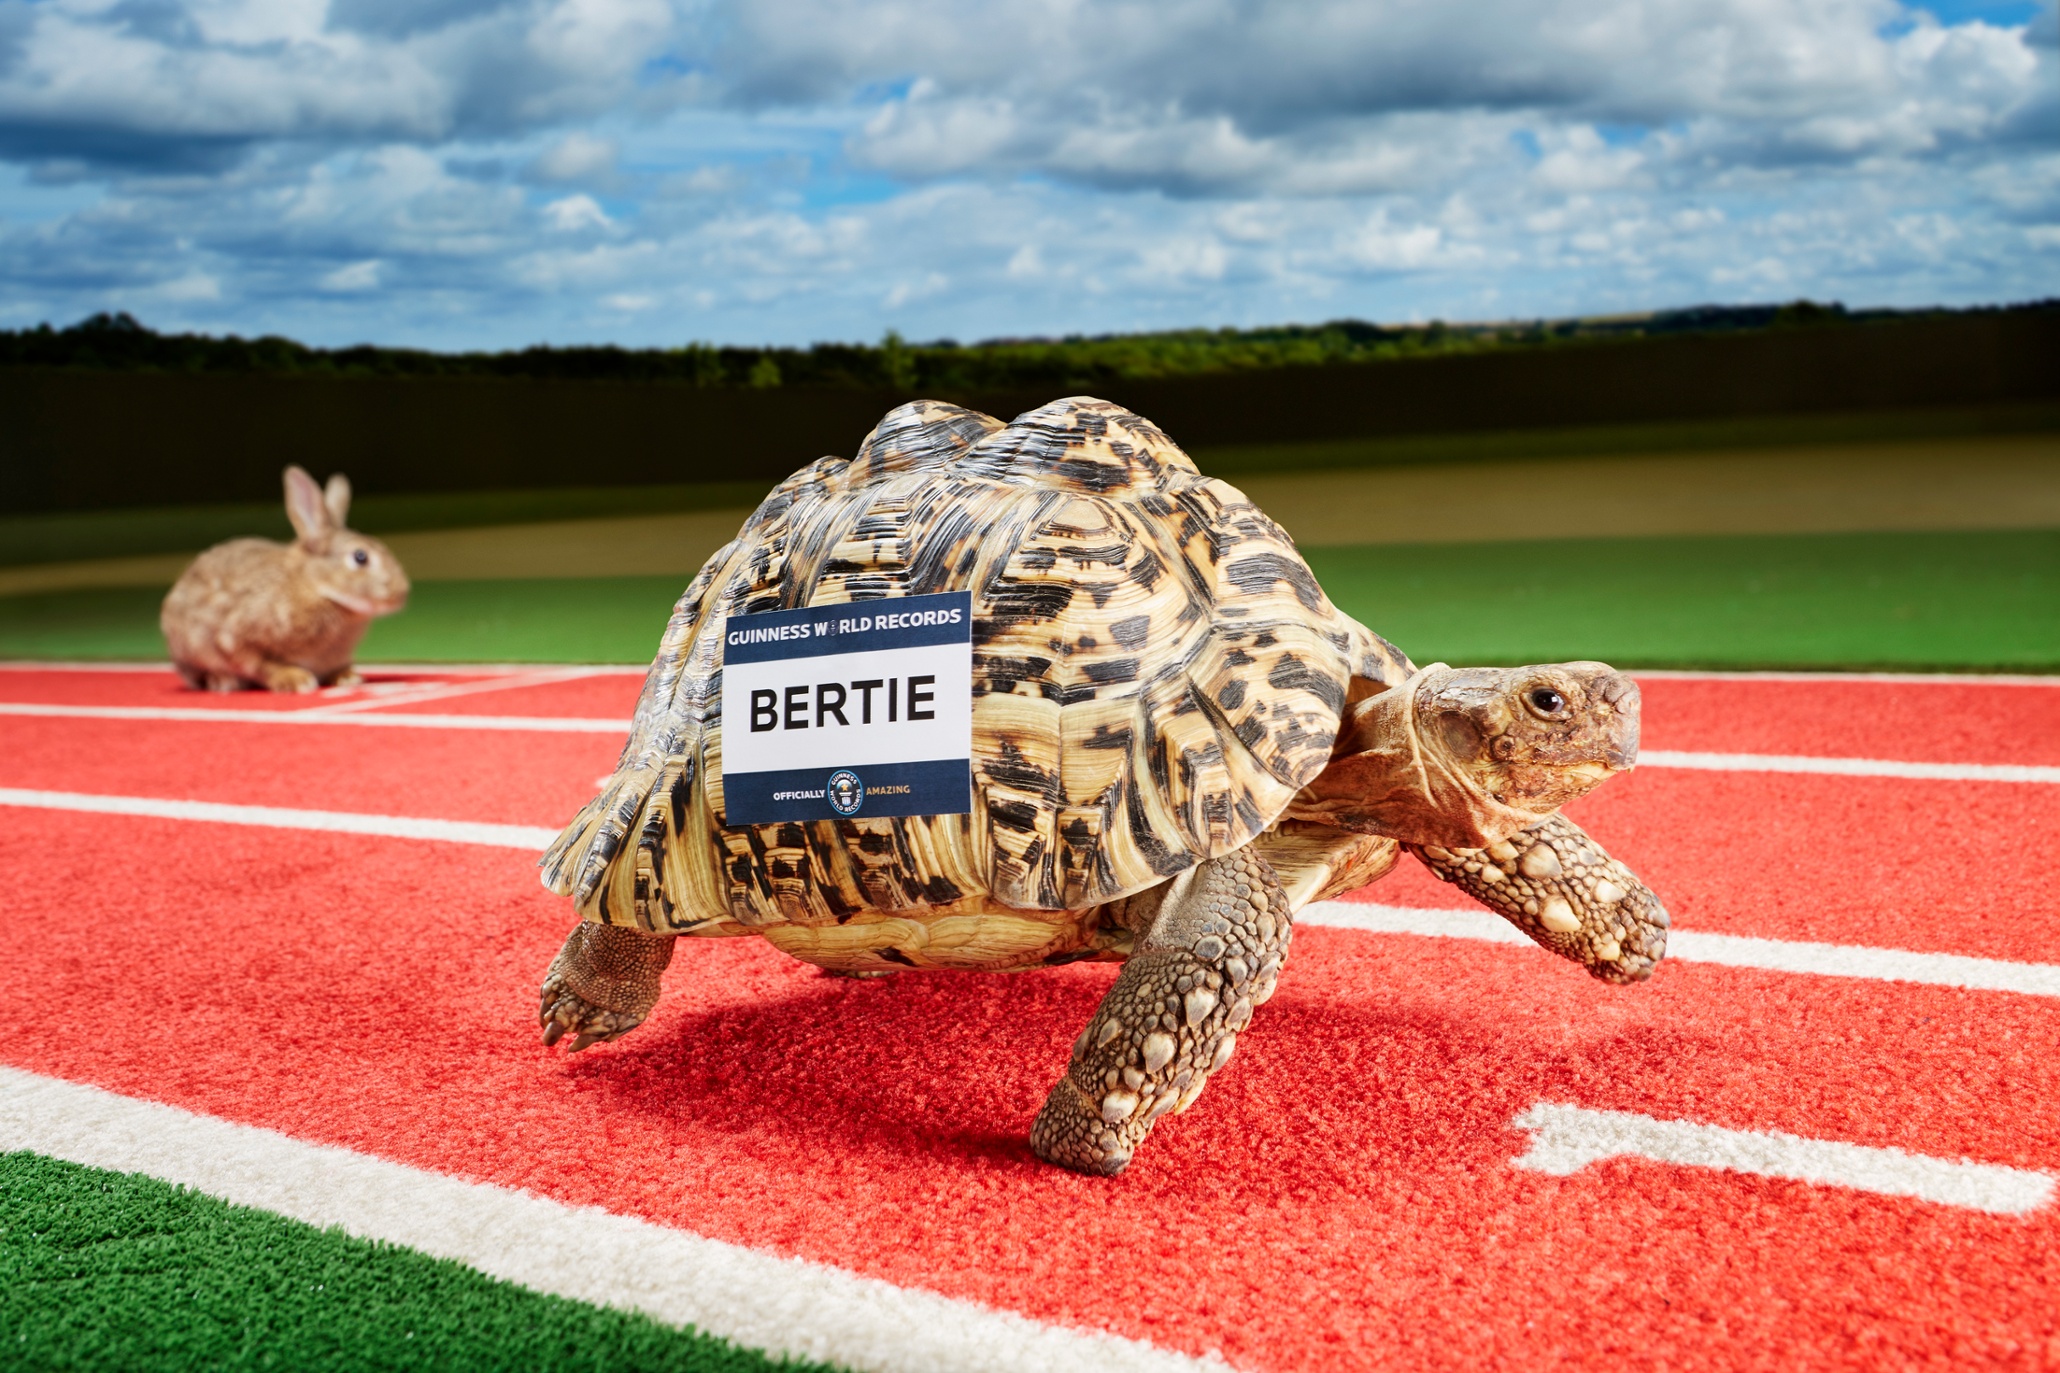 Bertie - Fastest Tortoise Guinness World Records 2015 Photo Credit: Paul Michael Hughes/Guinness World Records